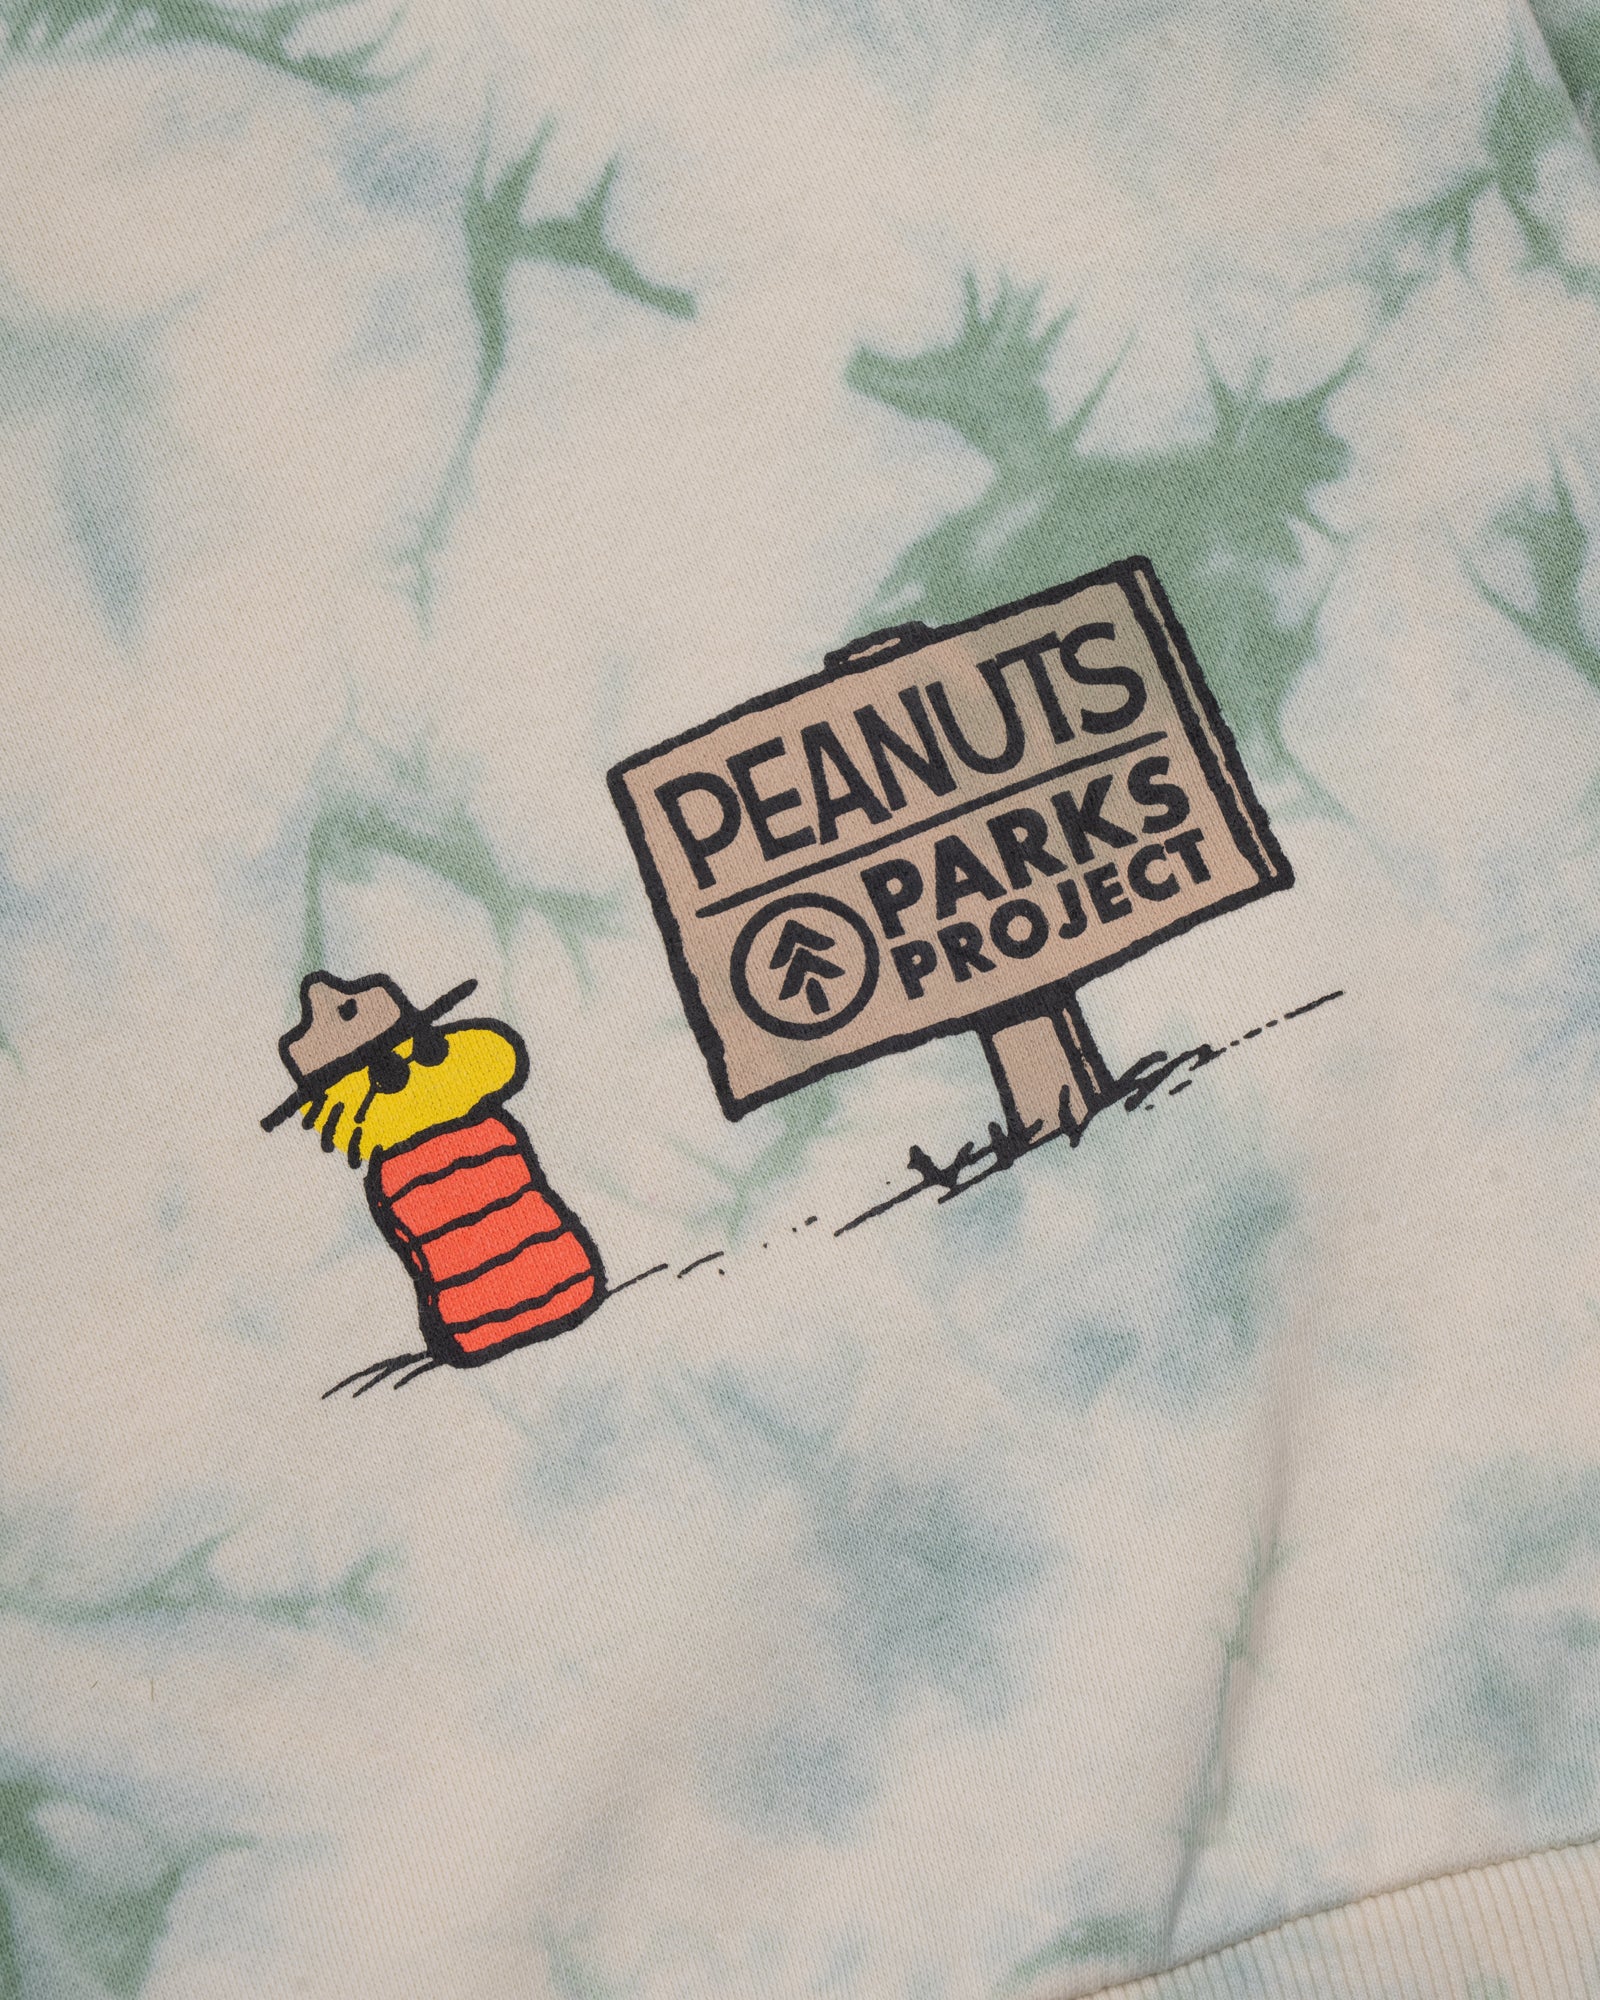 Peanuts x Parks Project Tie Dye Crew